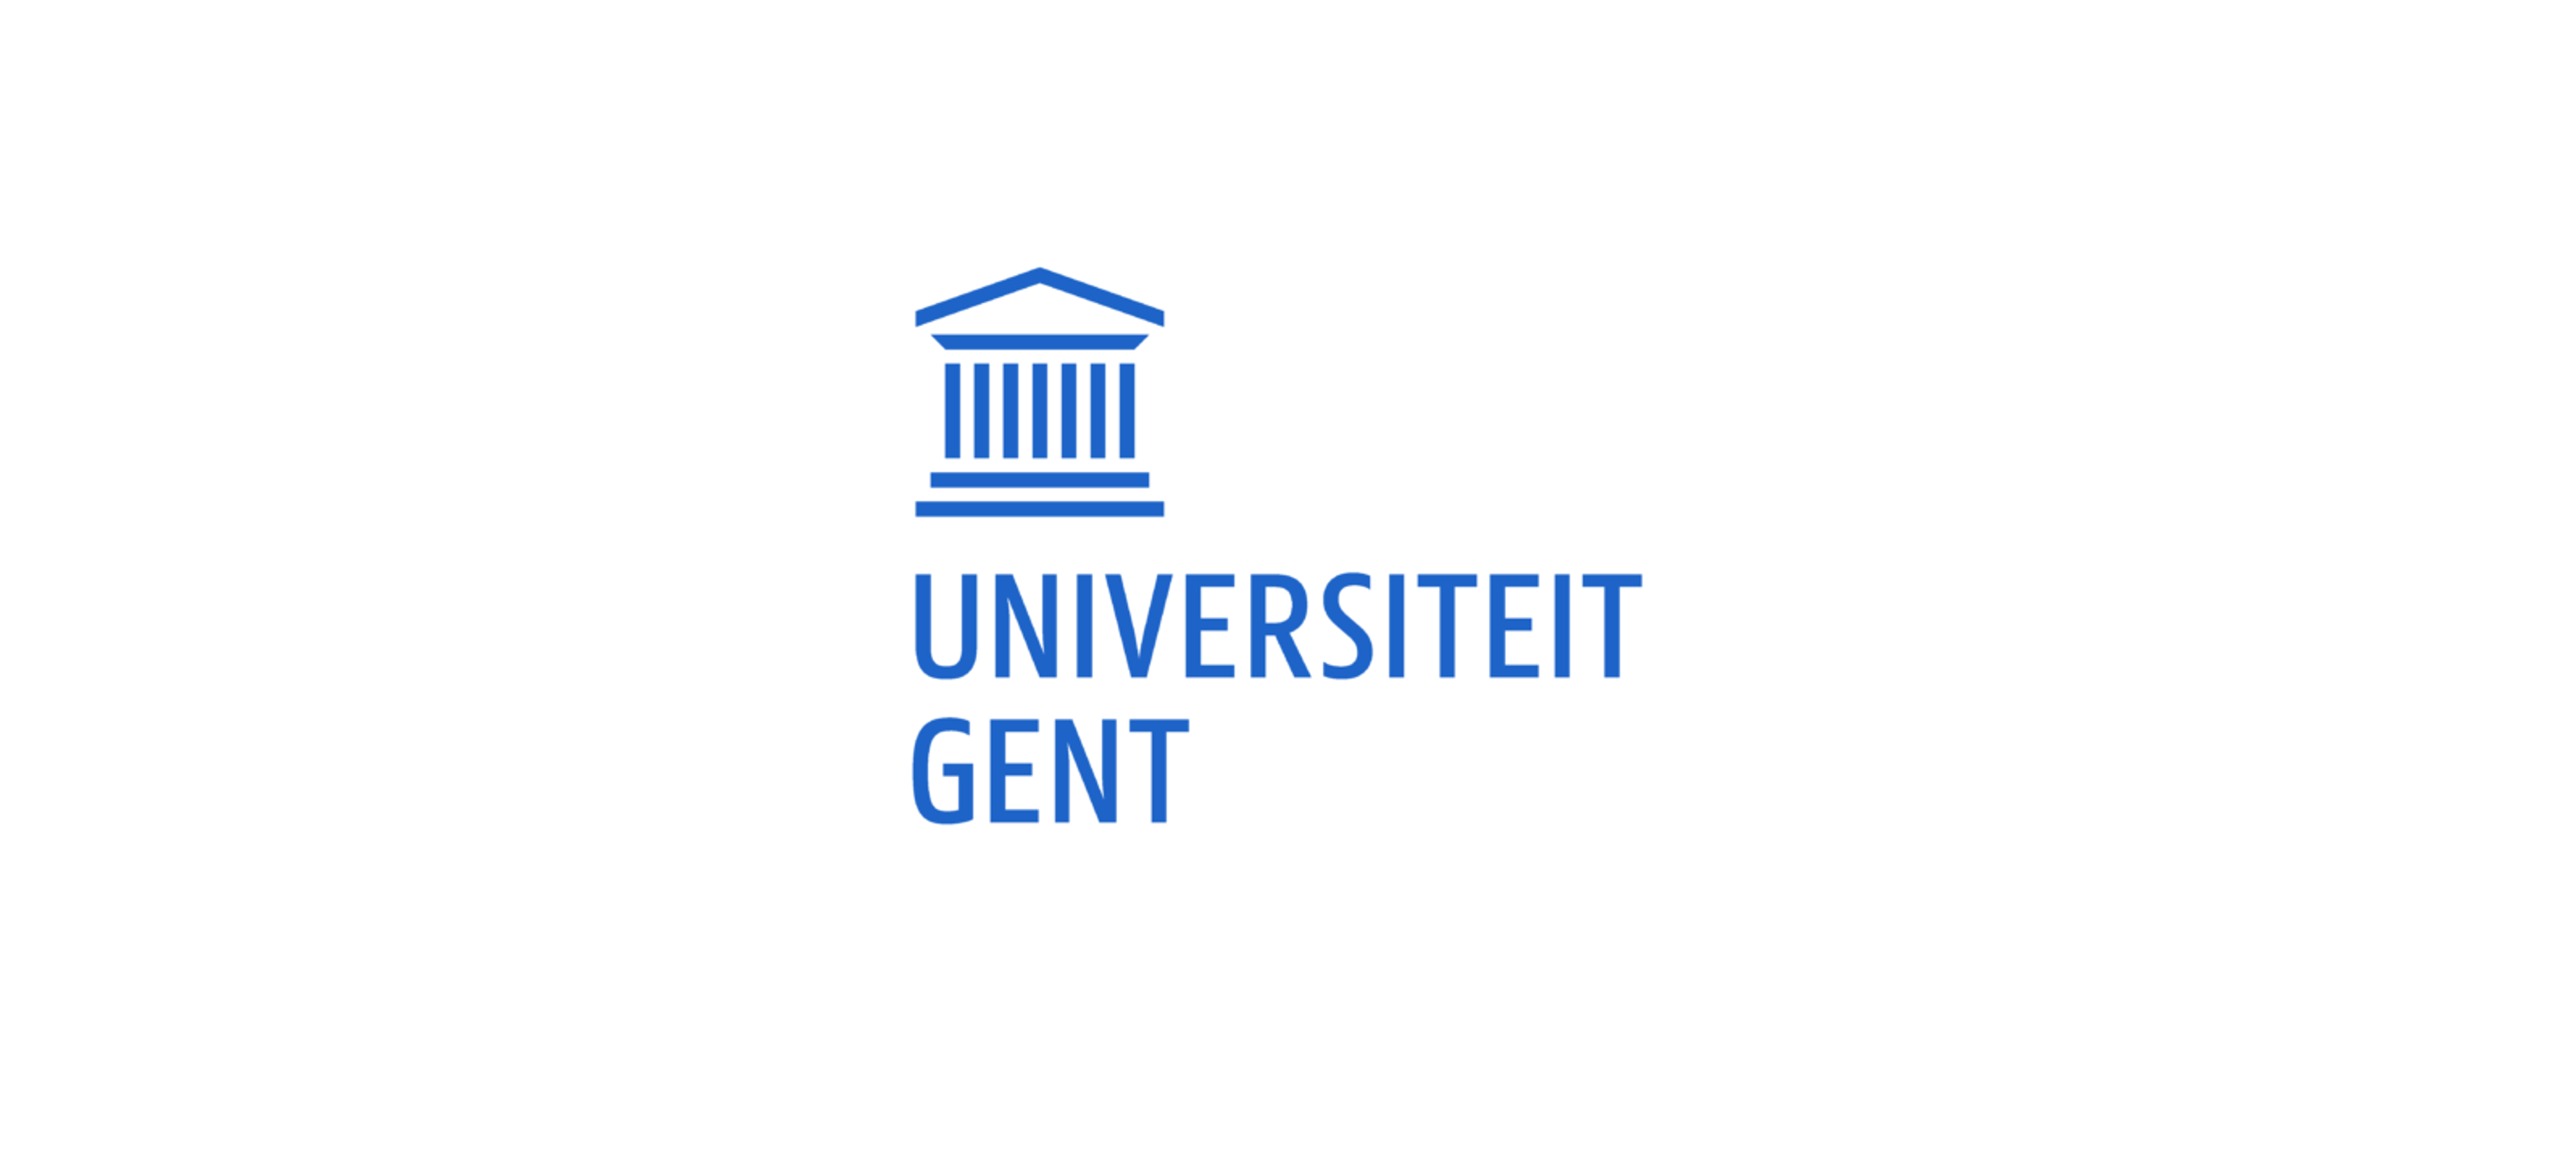 Universiteit Gent_case_workshop & coaching